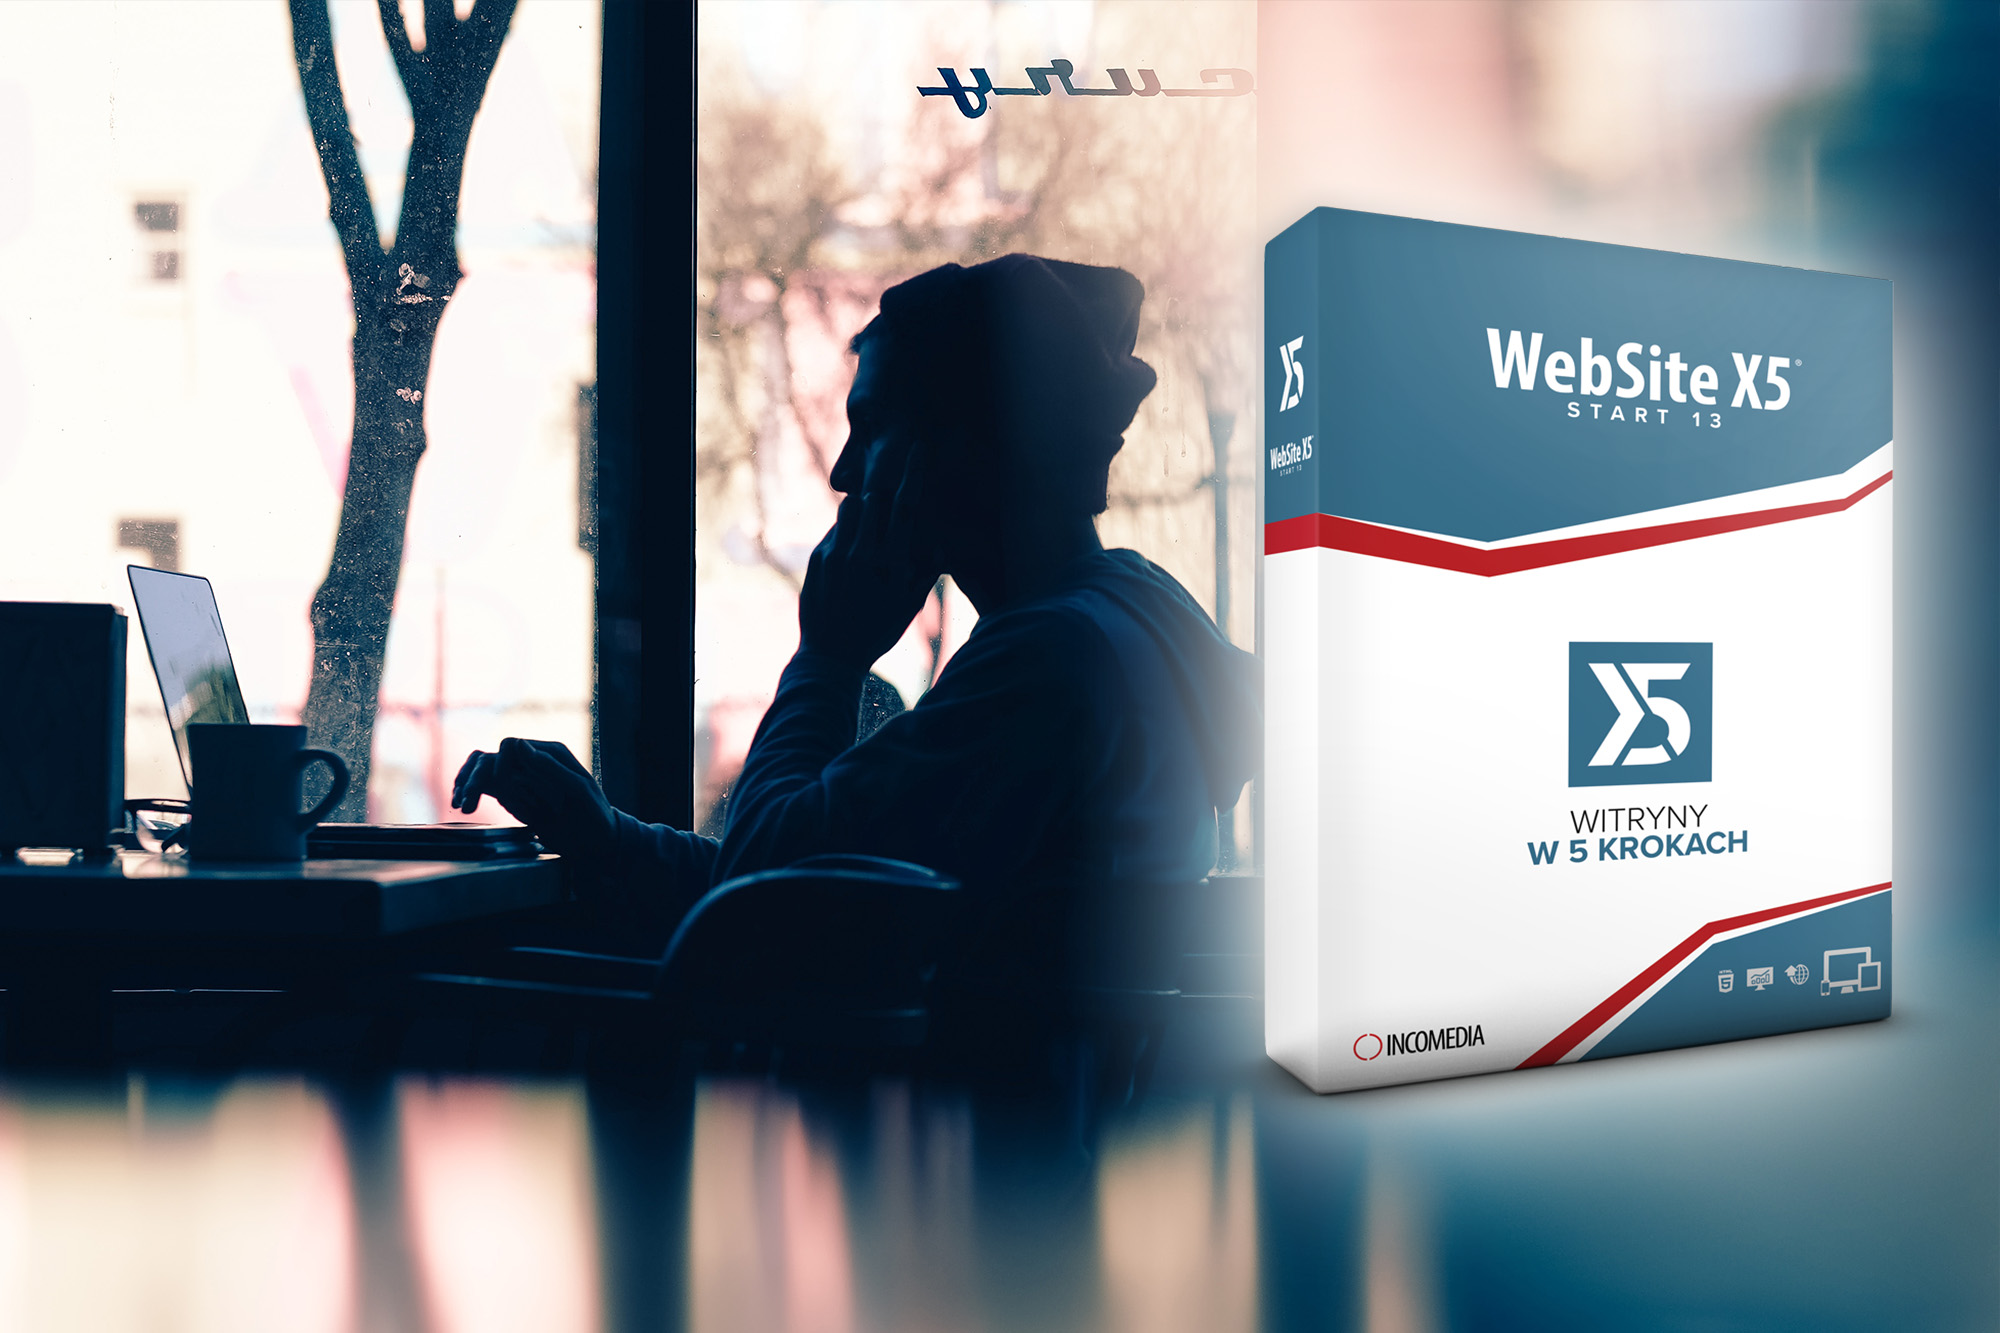 Program WebSite X5 – za darmo